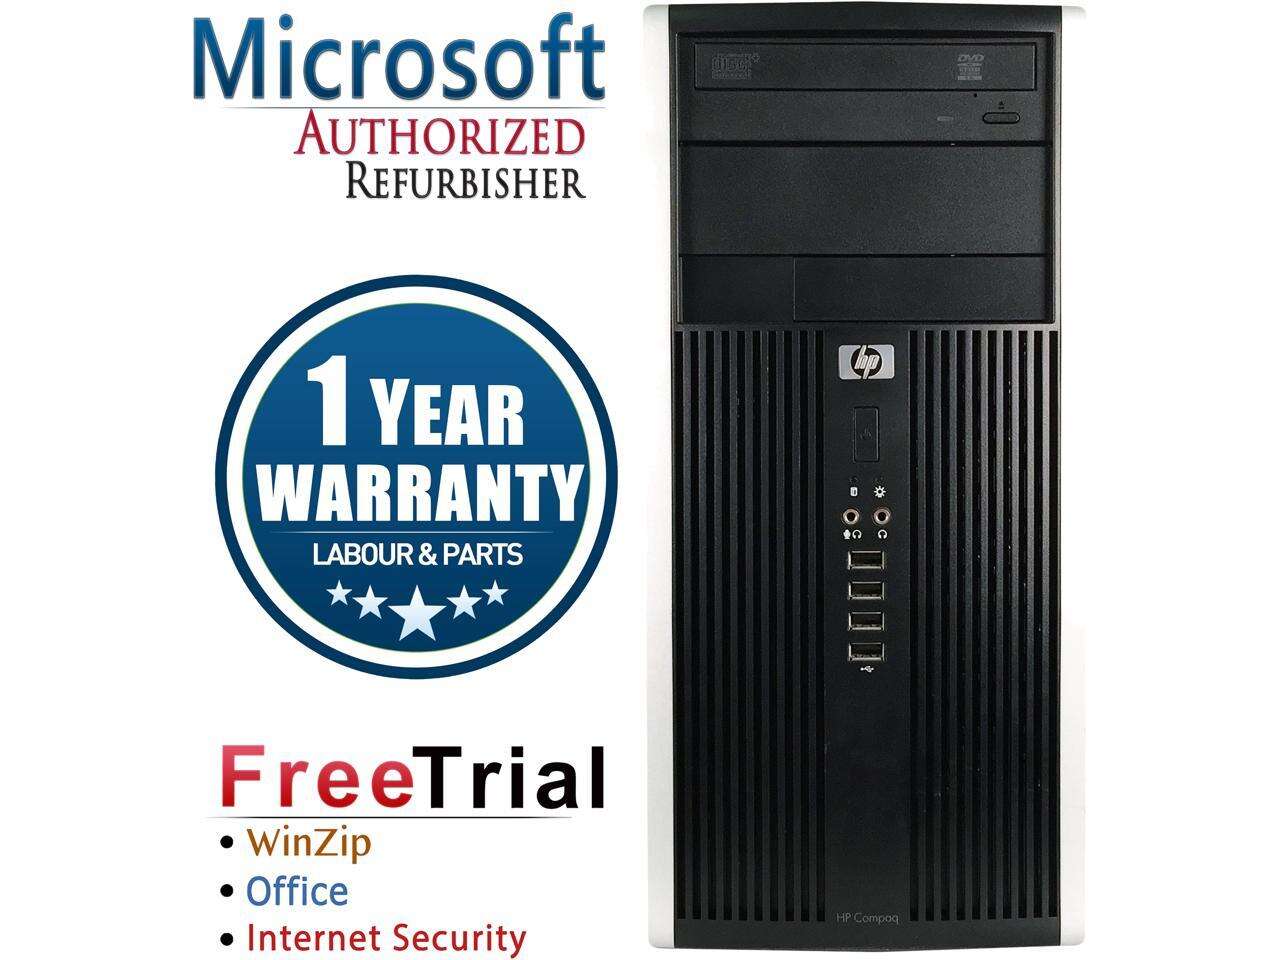 Refurbished HP Compaq Pro 6305 Tower AMD A4-5300B 3.4G / 8G DDR3 / 1TB / DVD / Windows 10 Professional 64 Bits / 1 Year Warranty